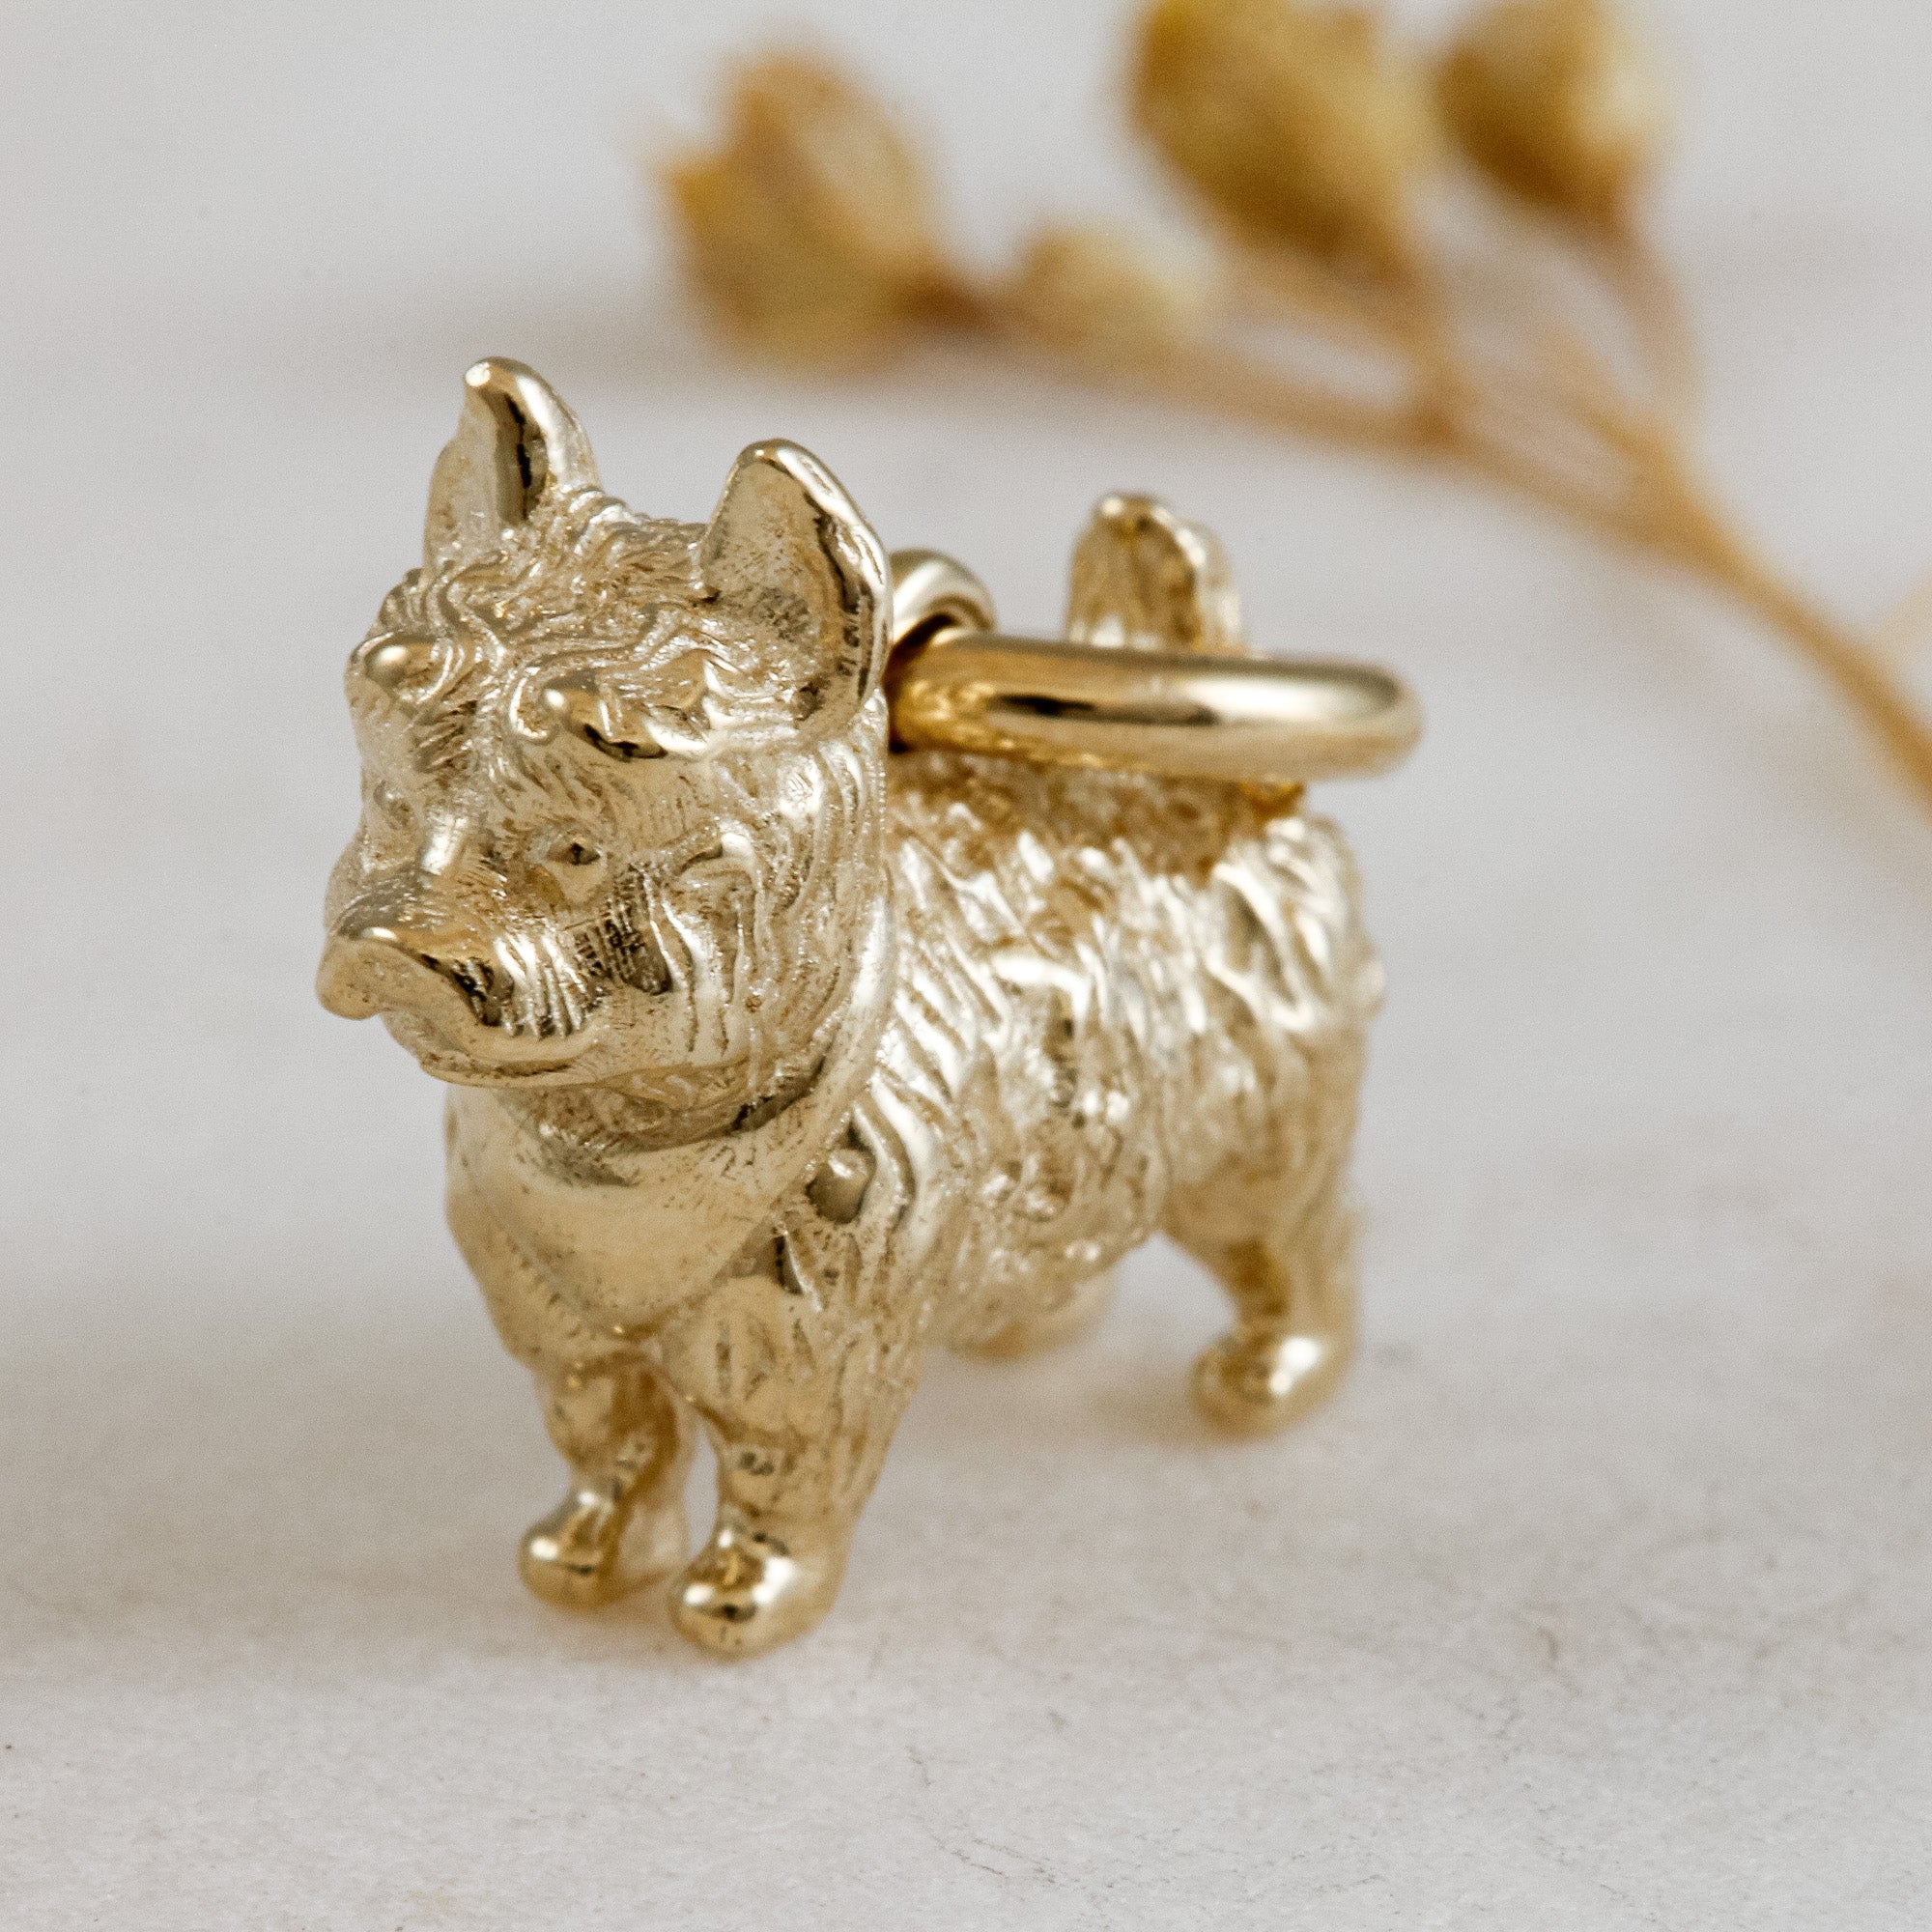 west highland or cairn terrier solid gold dog charm for a necklace or bracelet